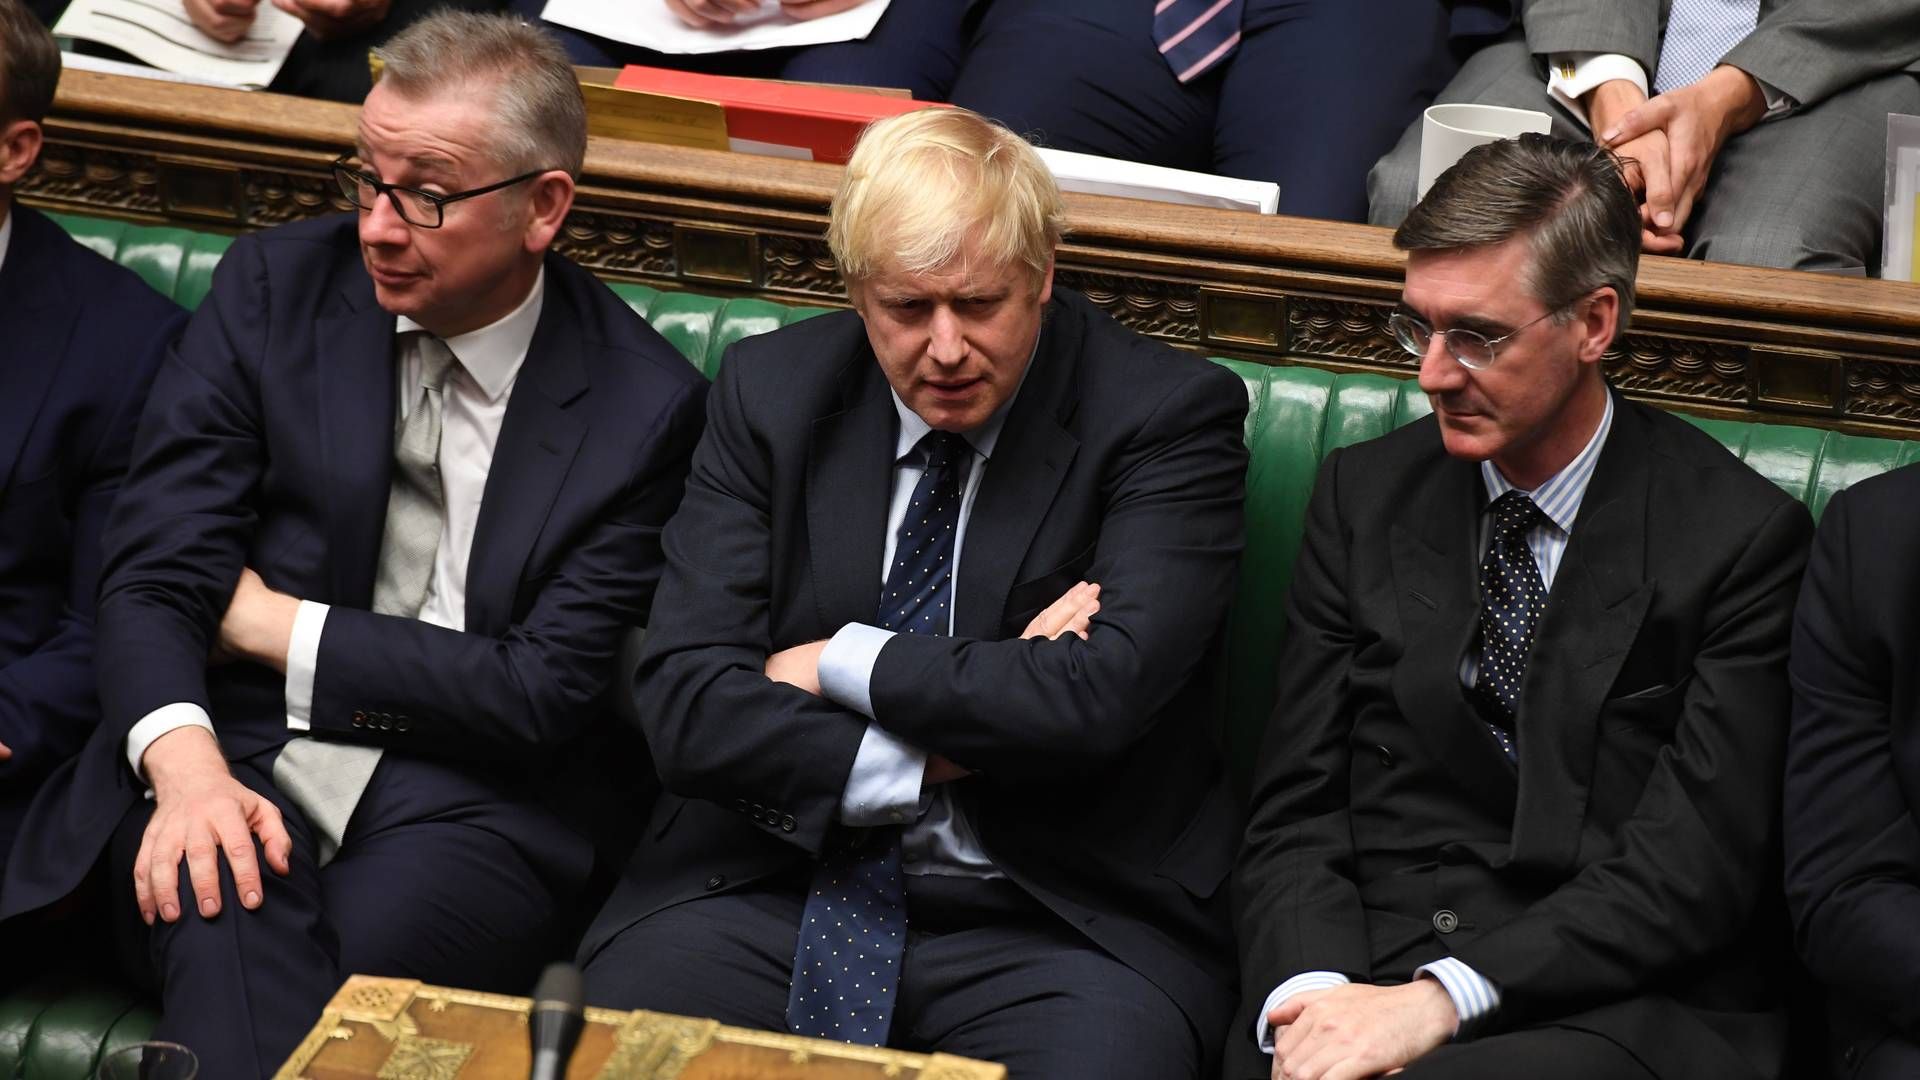 Foto: UK Parliament/Jessica Taylor/ Ritzau Scanpix